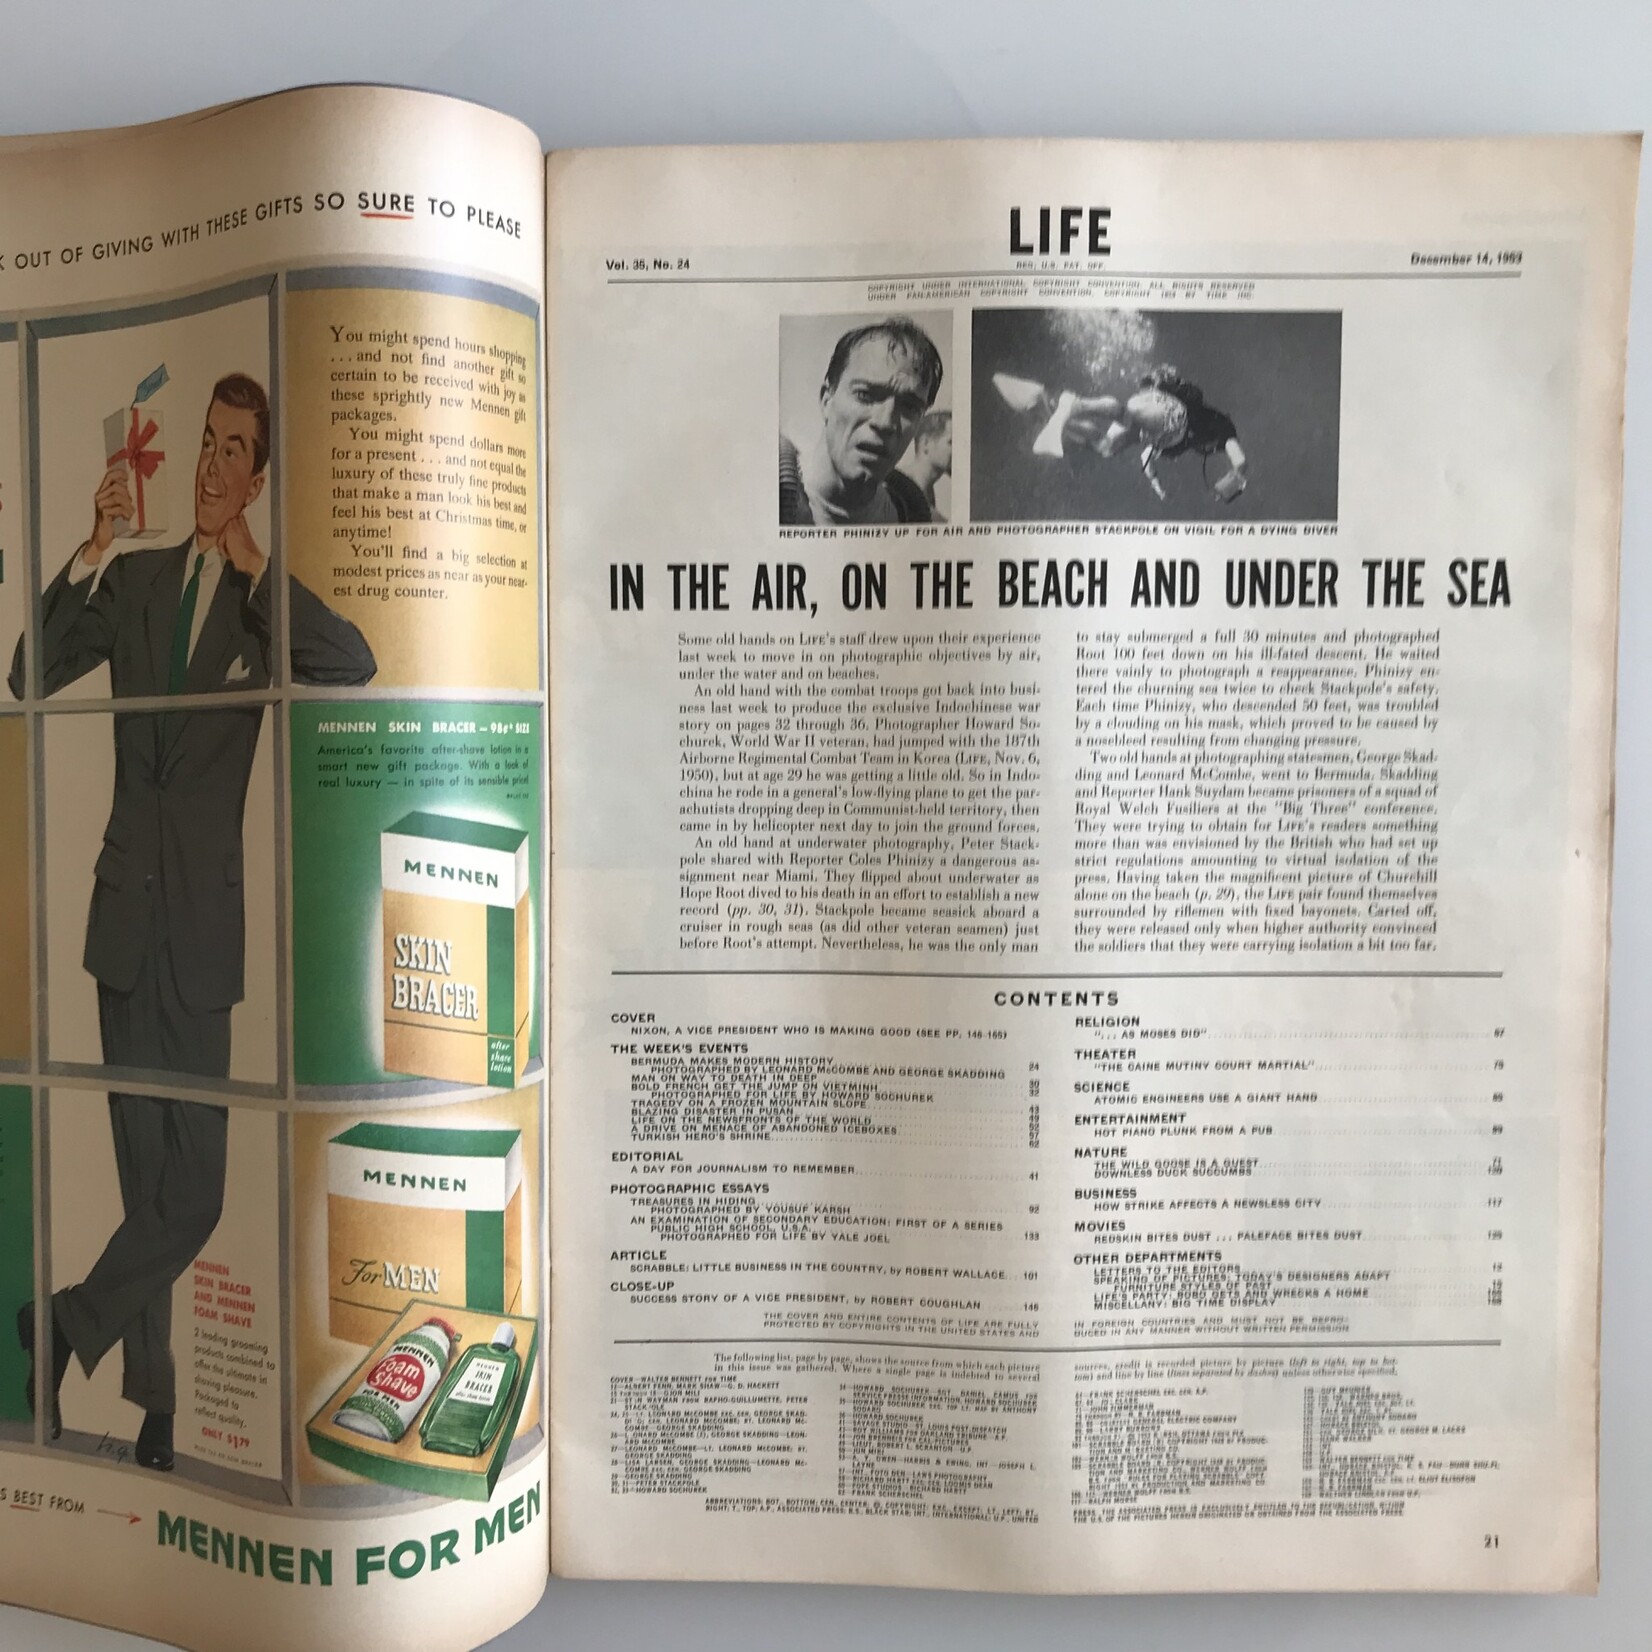 LIFE - 1953-12-14, Richard Nixon - Magazine (USED)